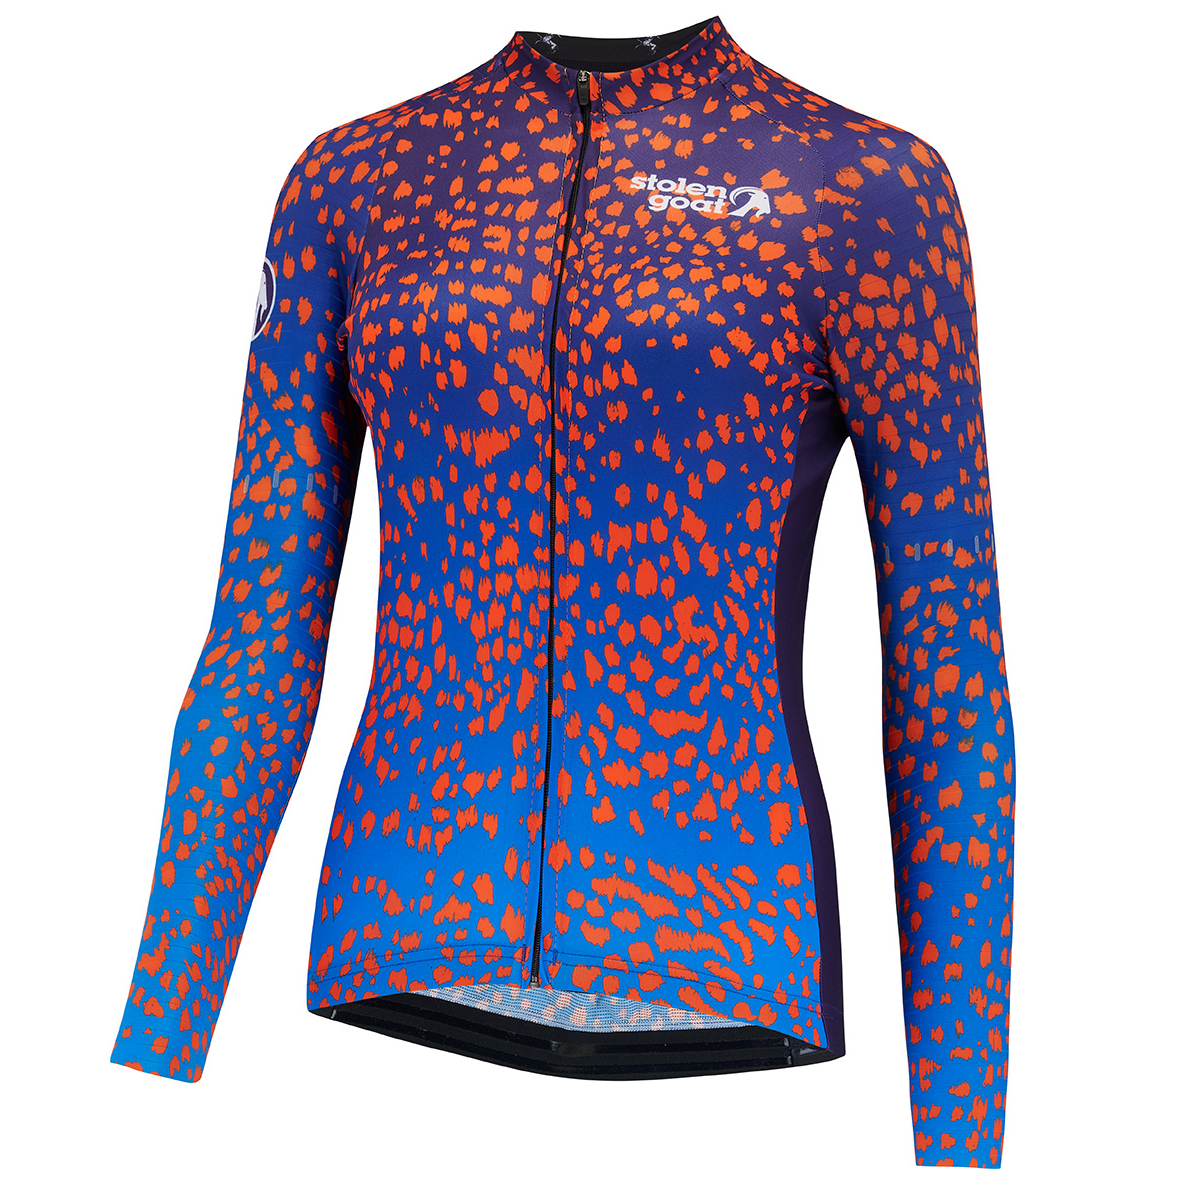 Stolen Goat women's strutter long sleeved cycling jersey blue gradient with orange splat design